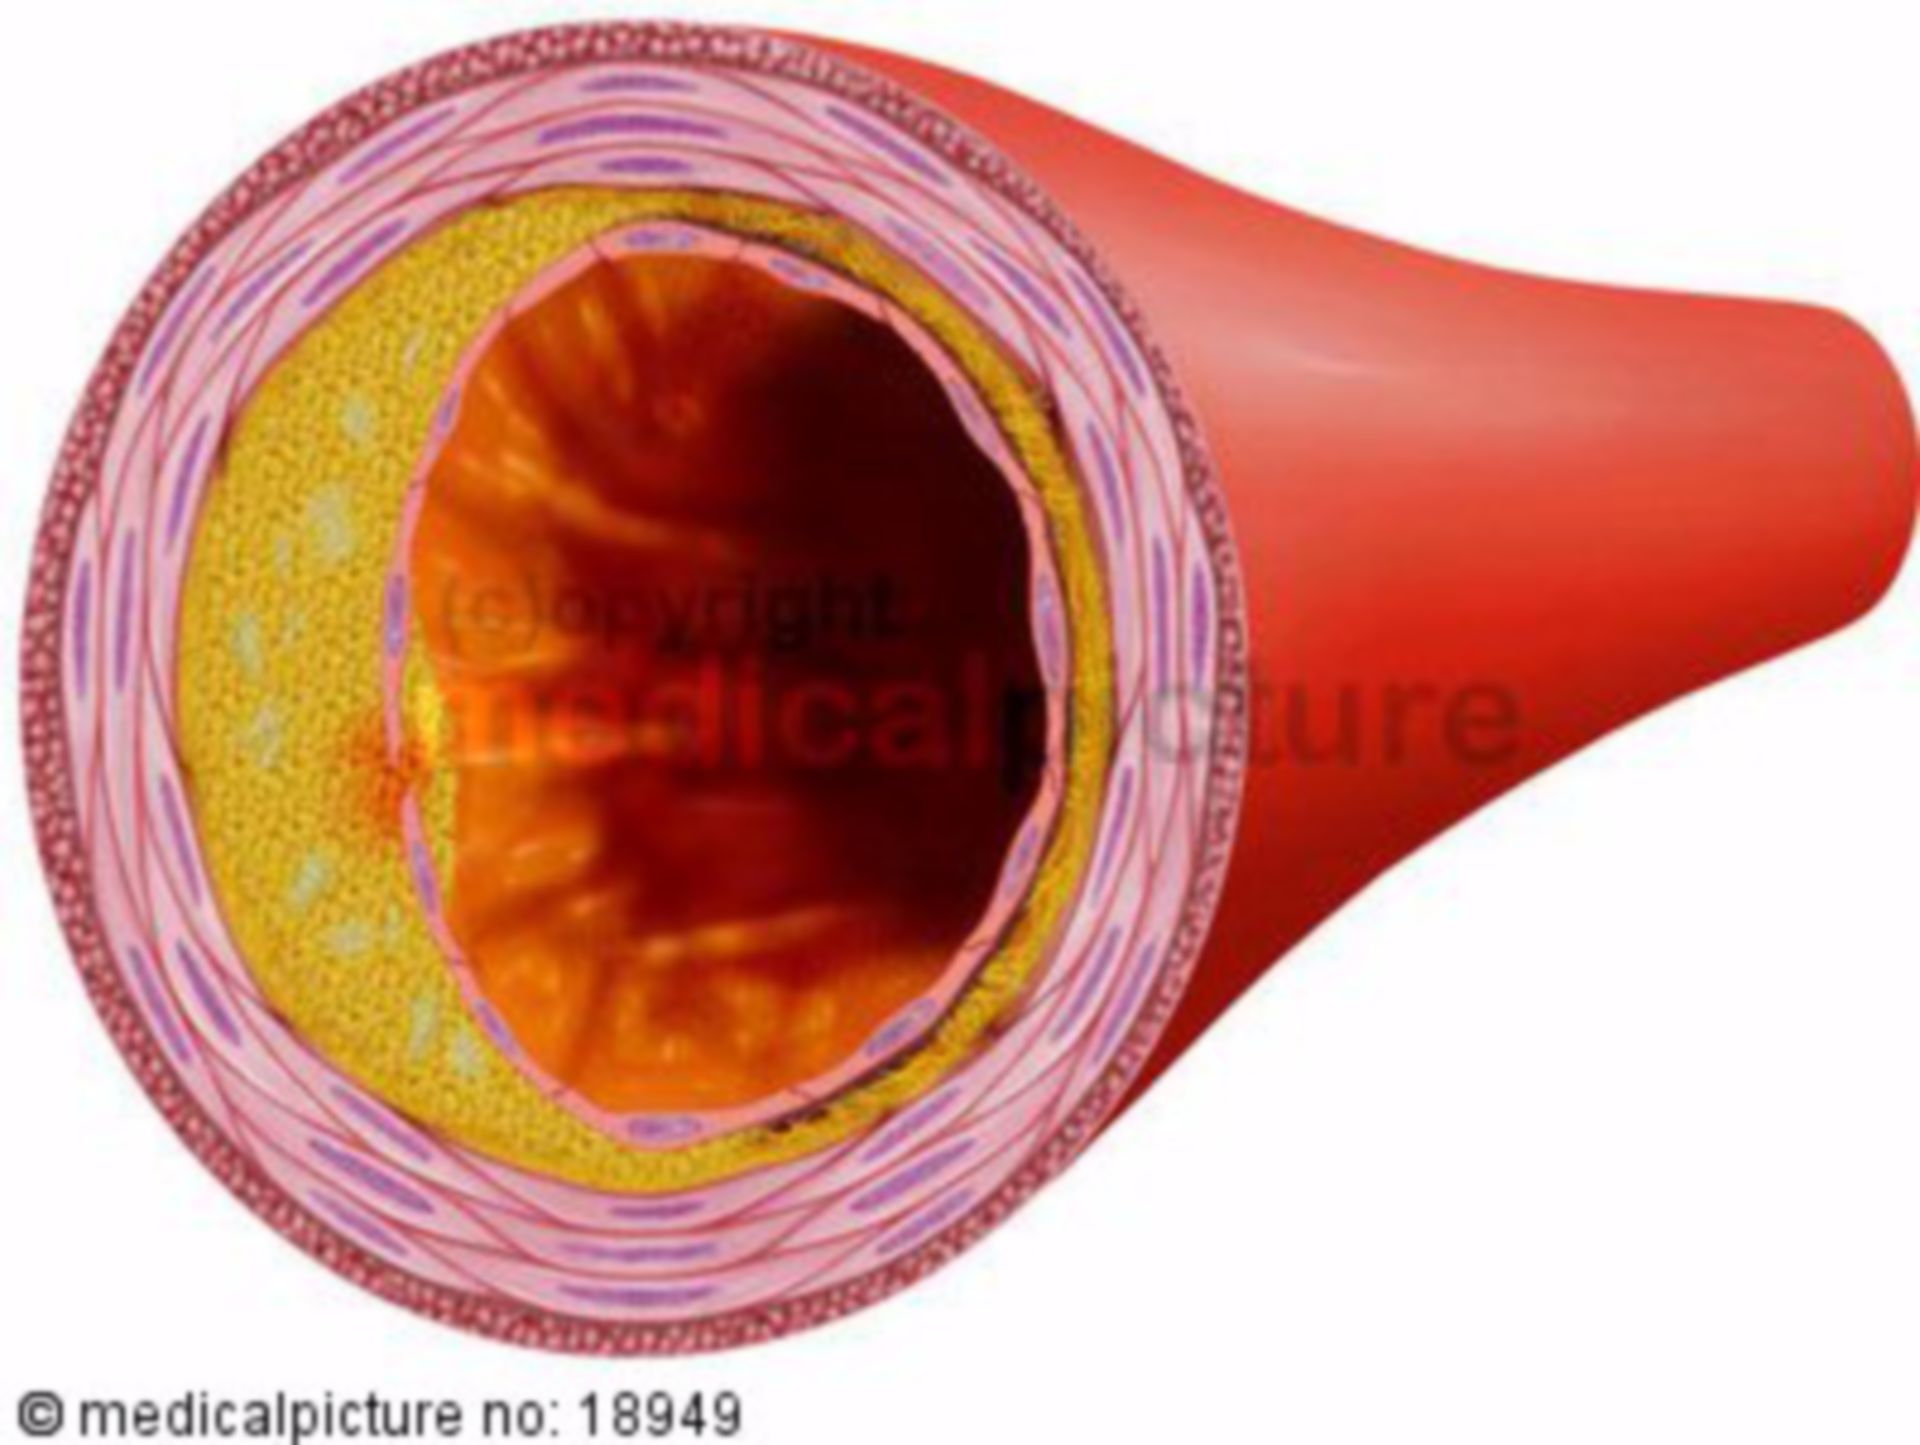 Arteriosclerotic blood vessel, arteriosclerosis